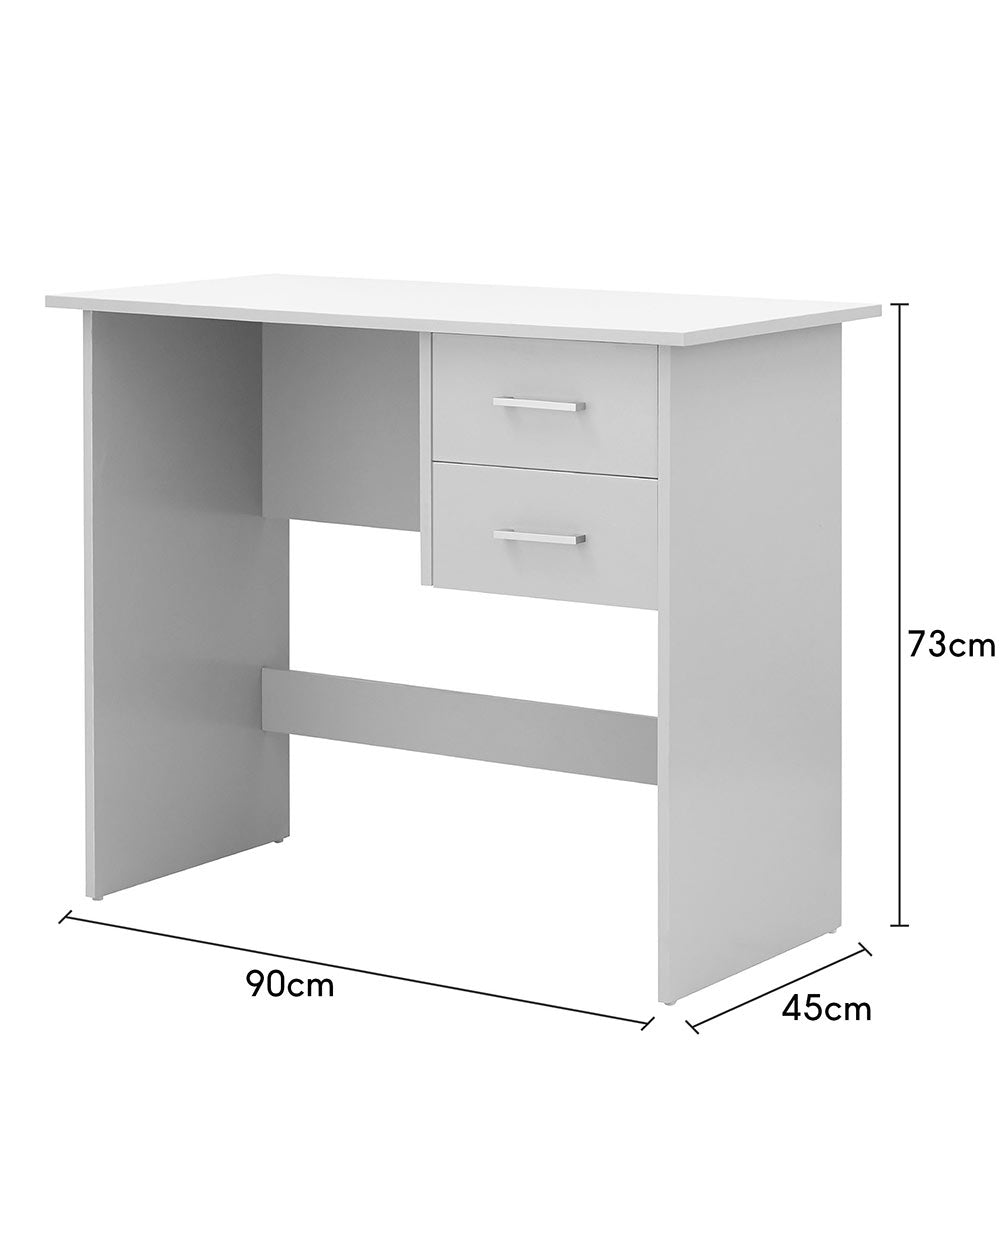 measurement photo of the desk